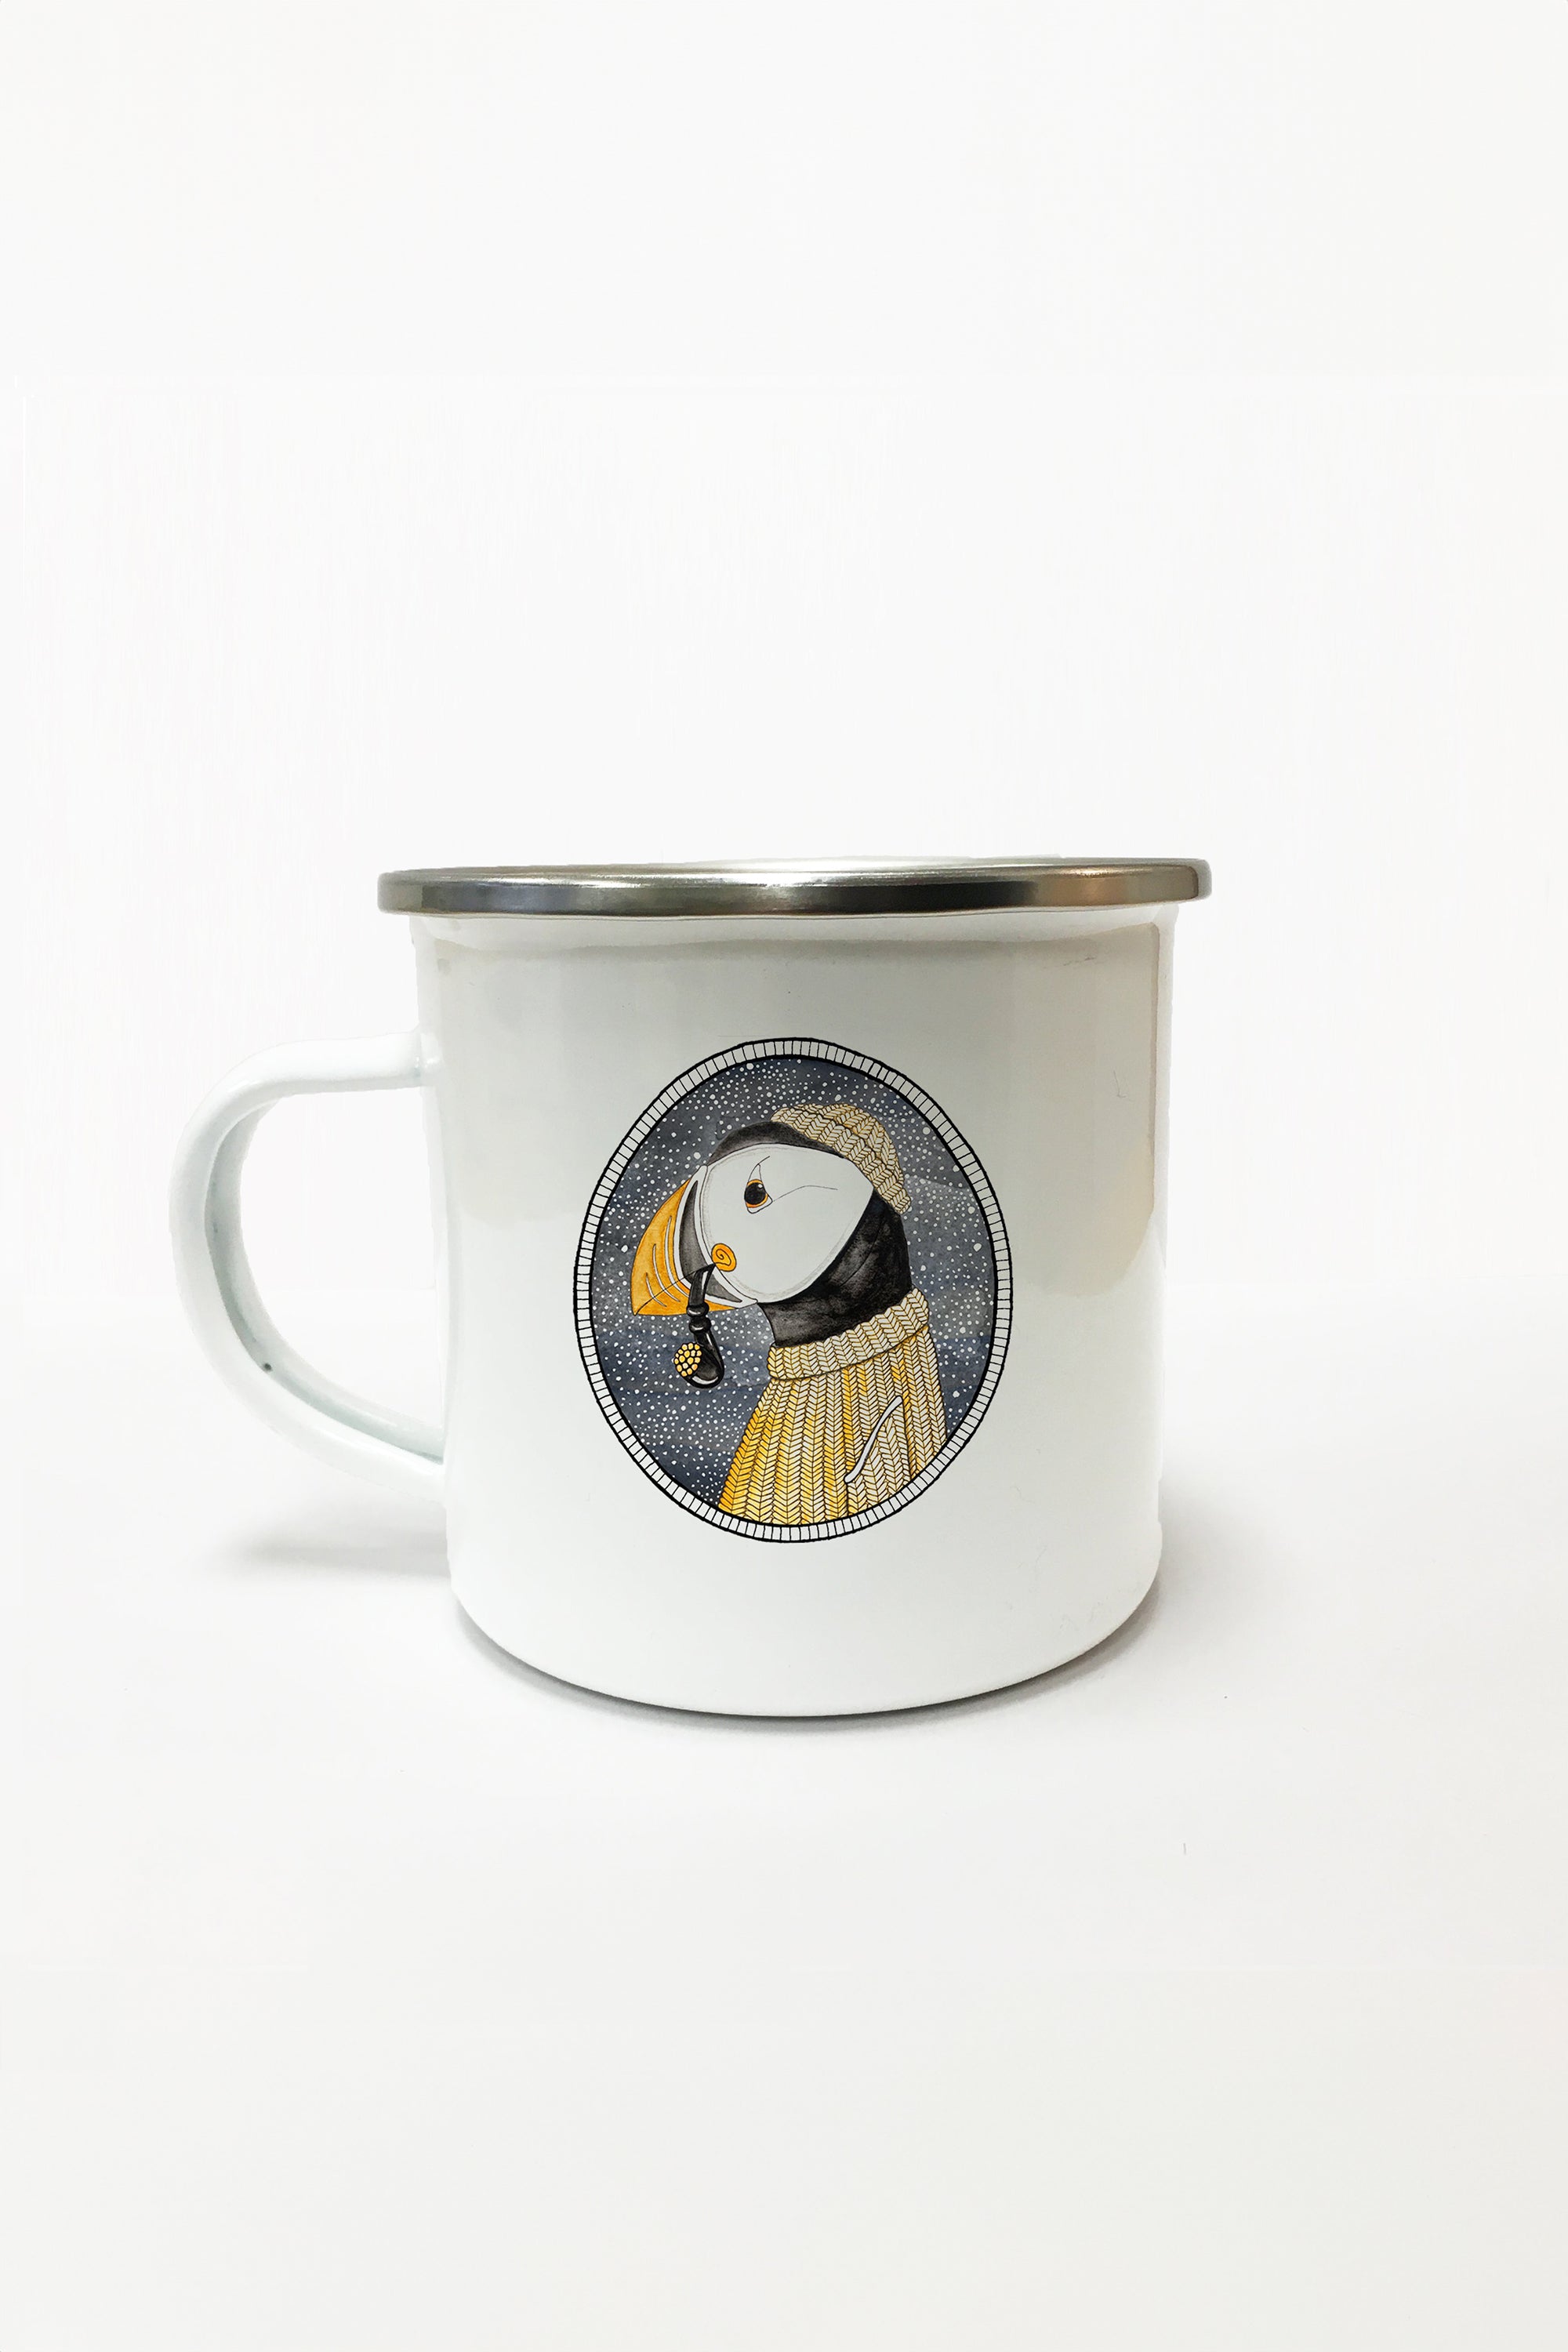 Sailor Puffin Enamel Mug